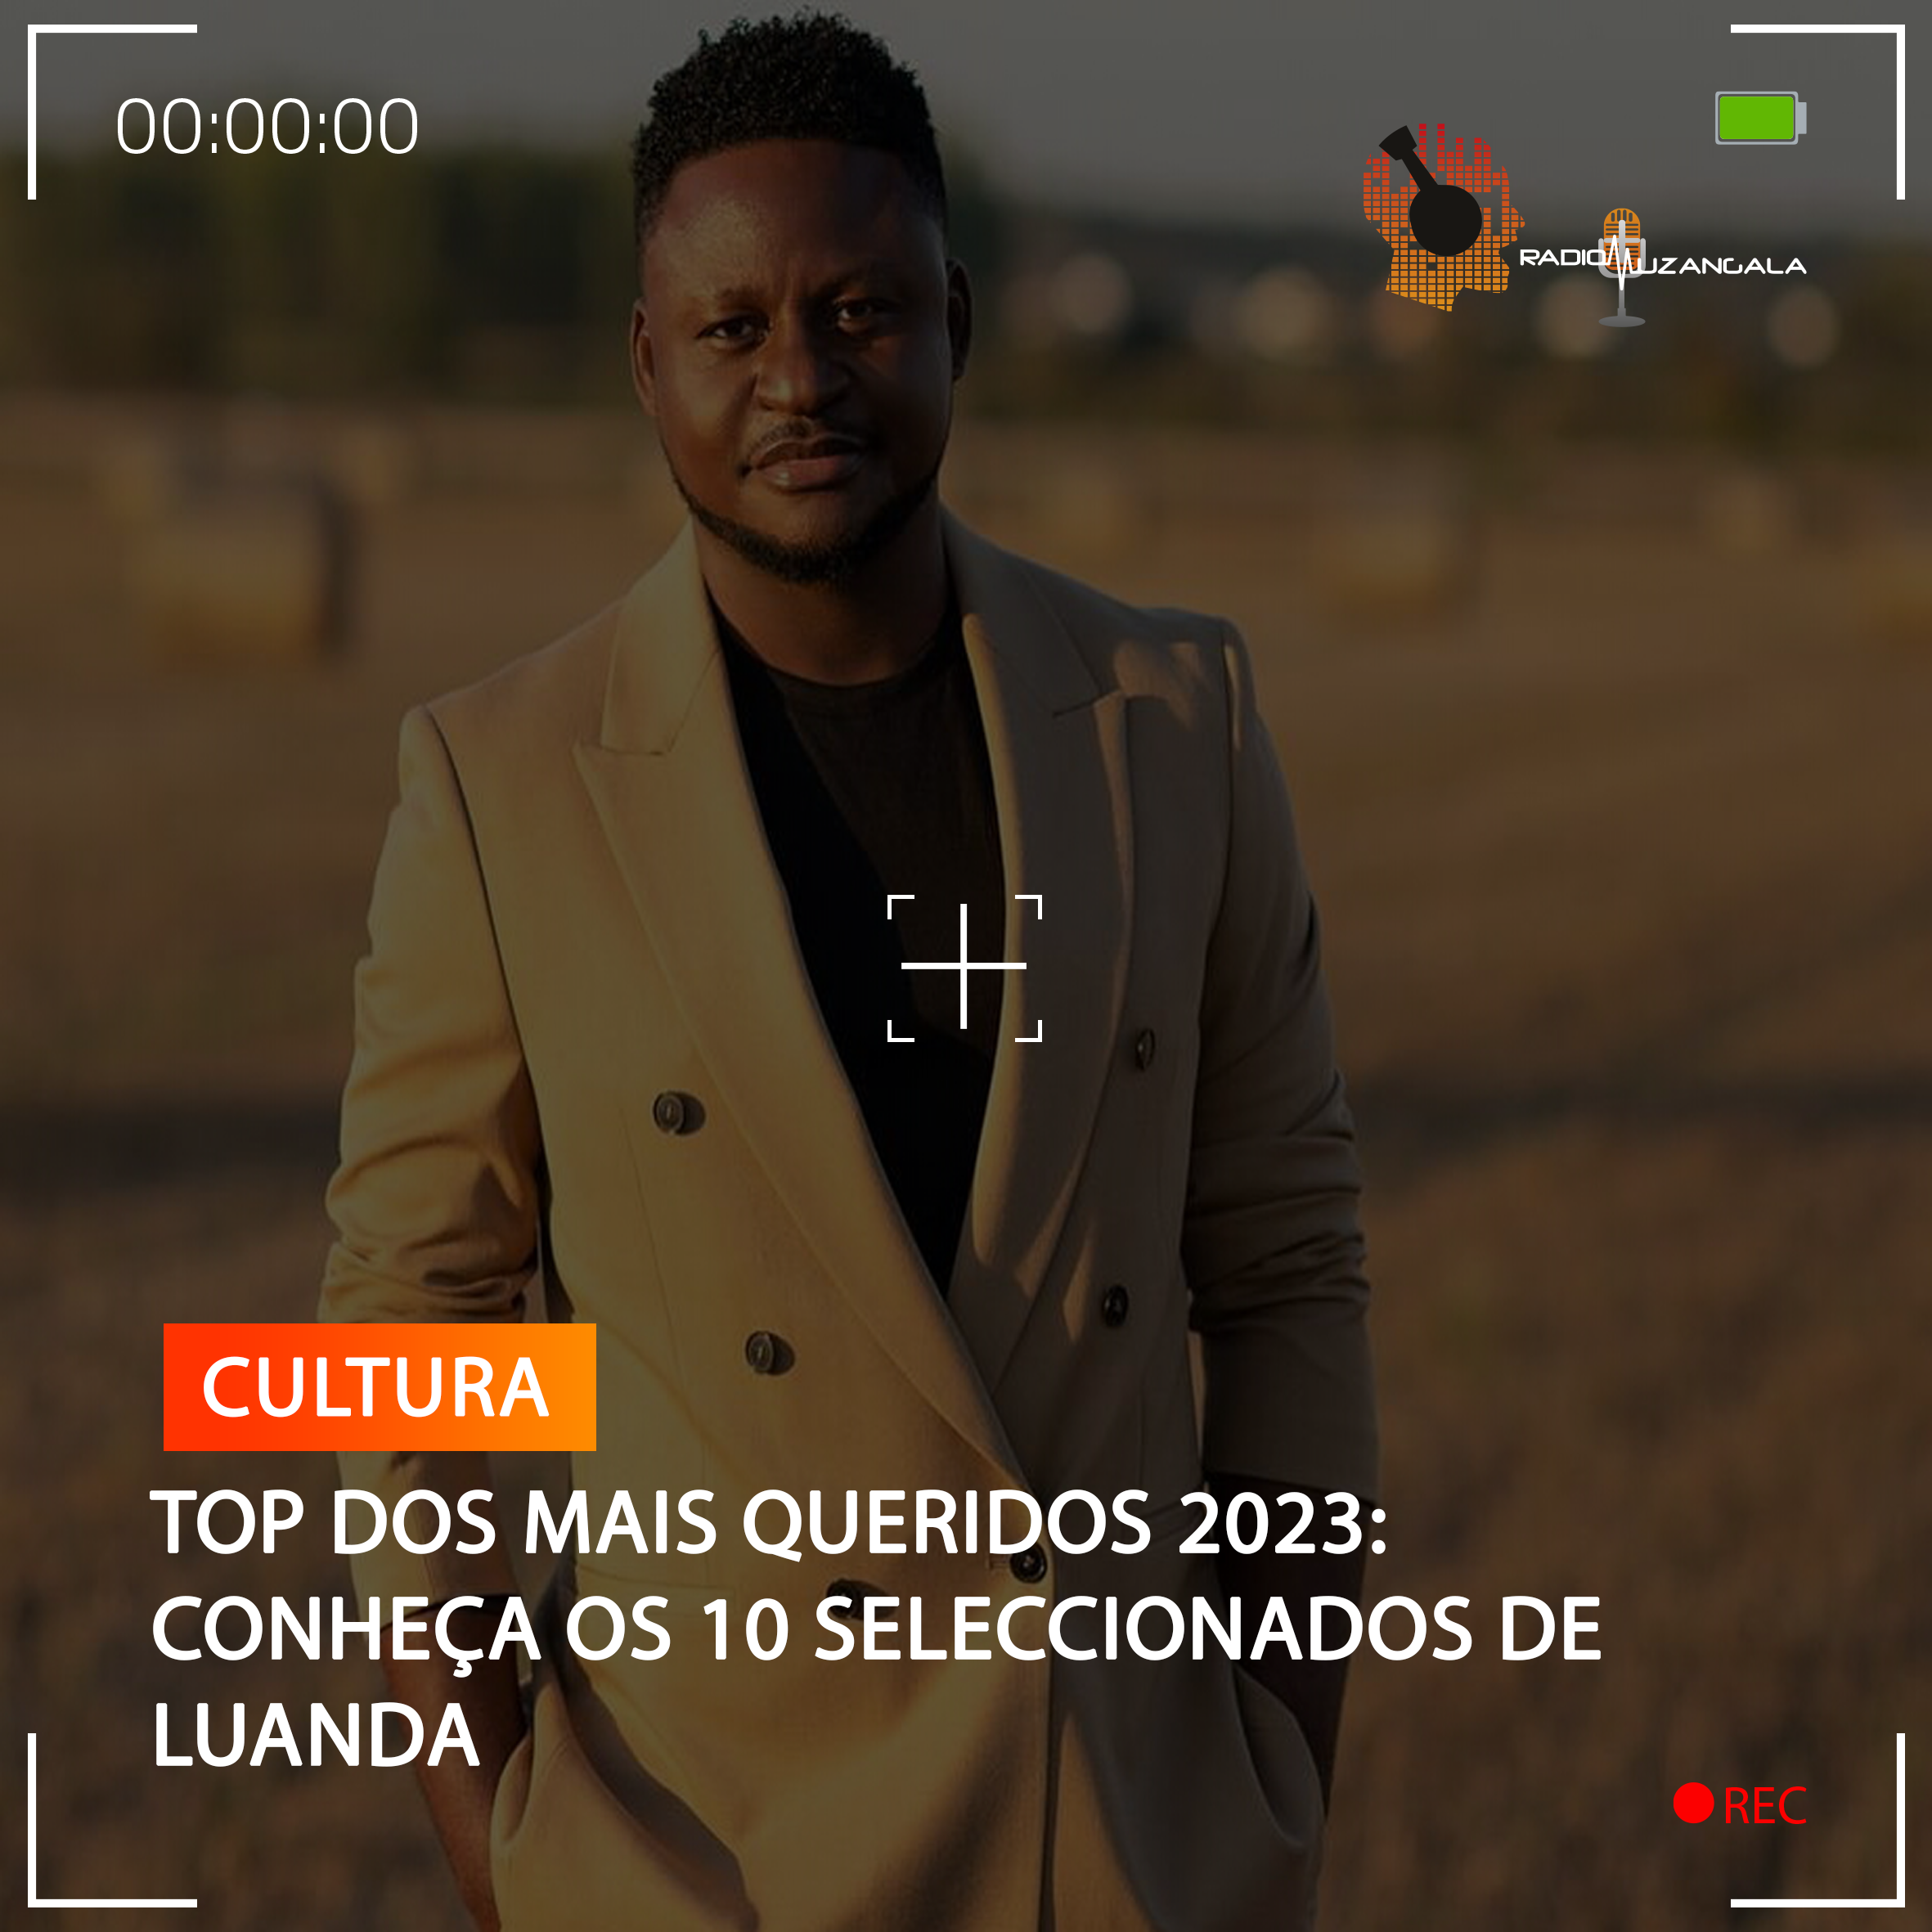  TOP DOS MAIS QUERIDOS 2023: CONHEÇA OS 10 SELECCIONADOS DE LUANDA